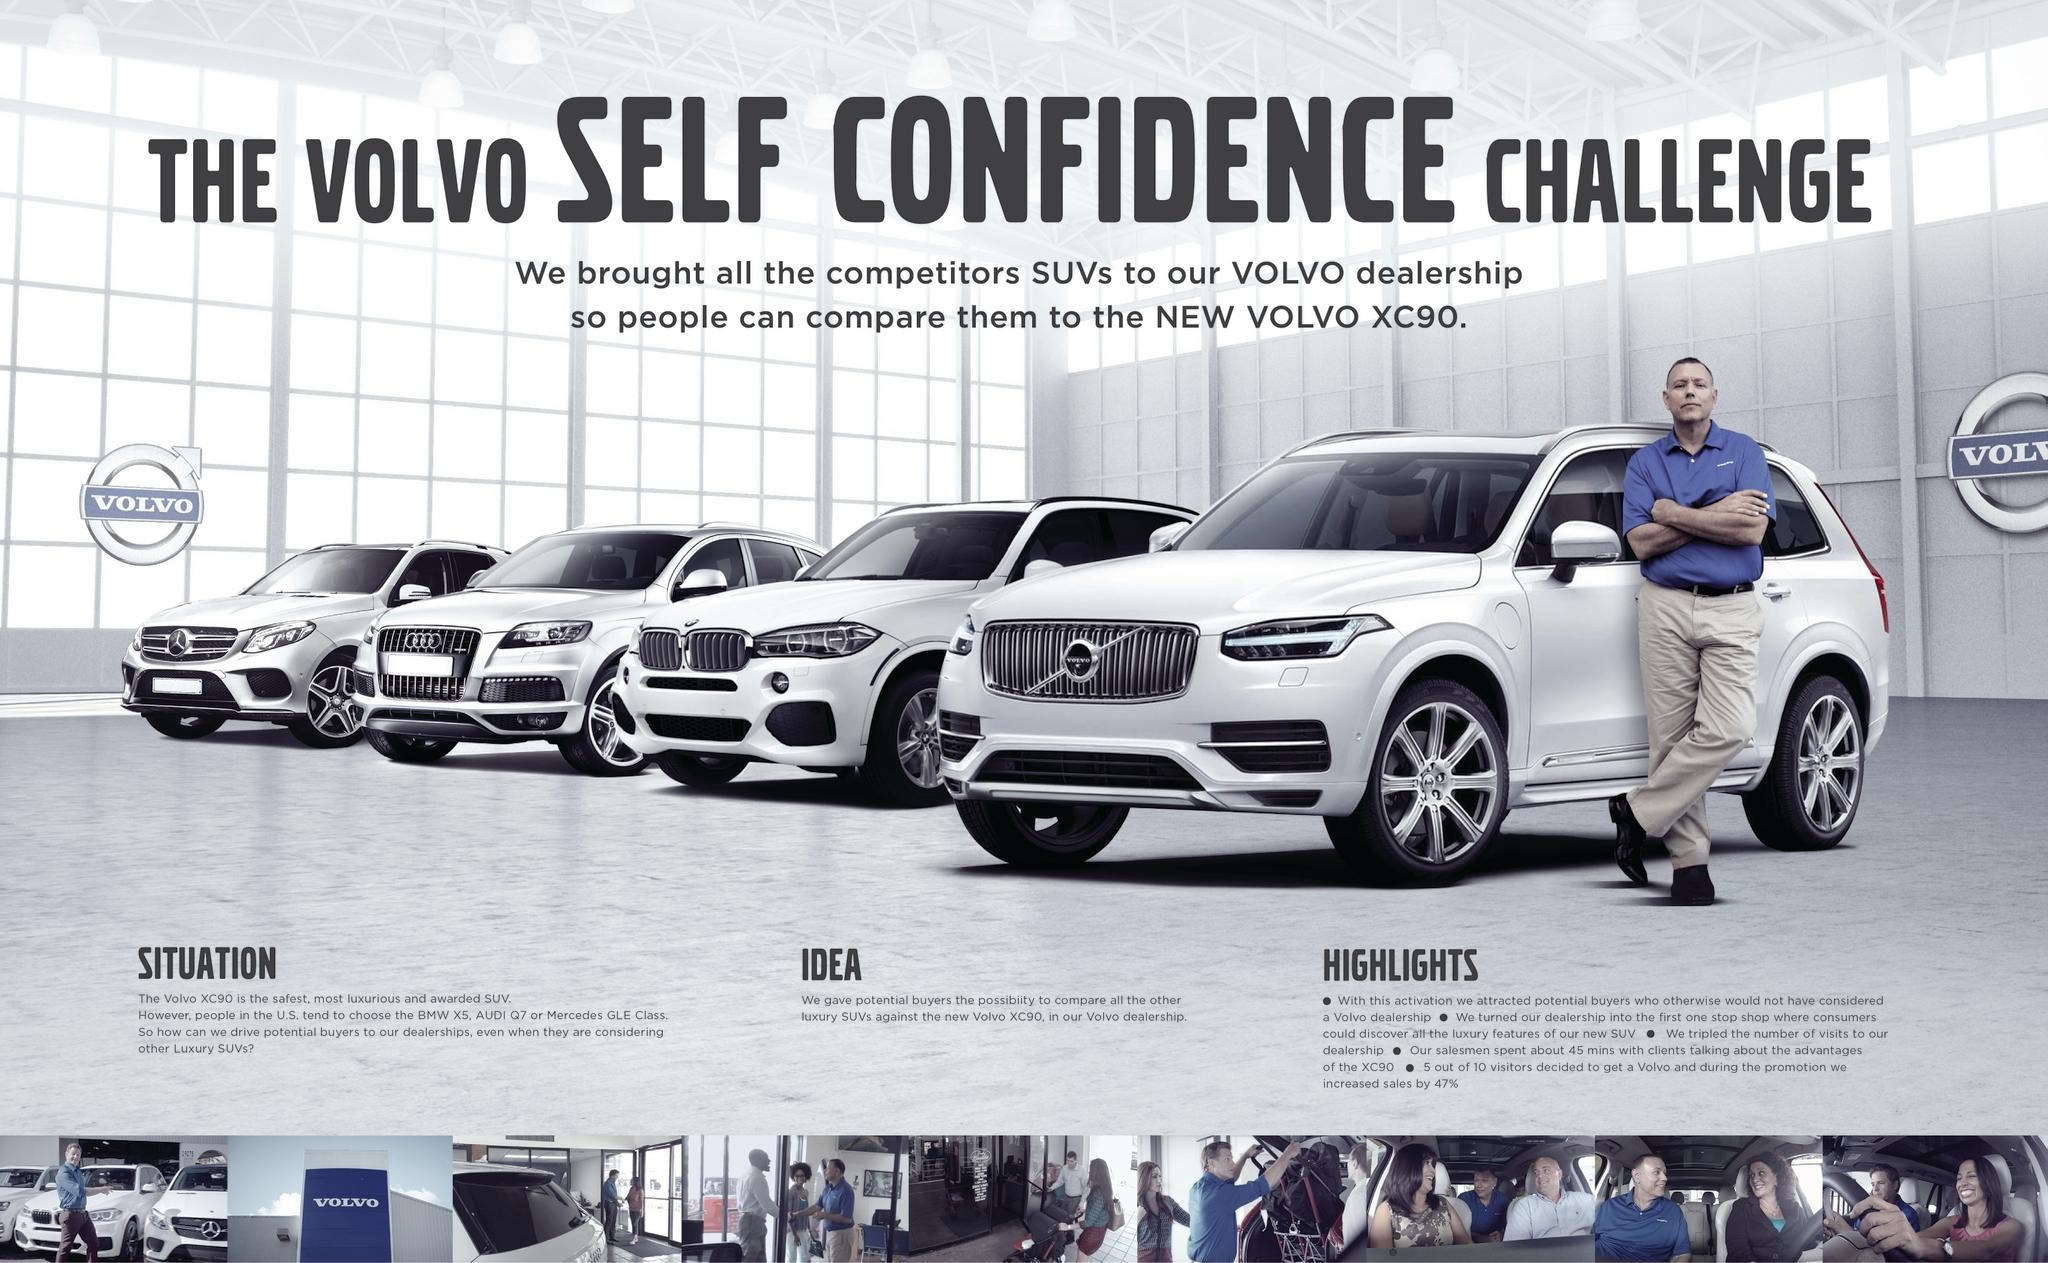 The Volvo Self Confidence Challenge